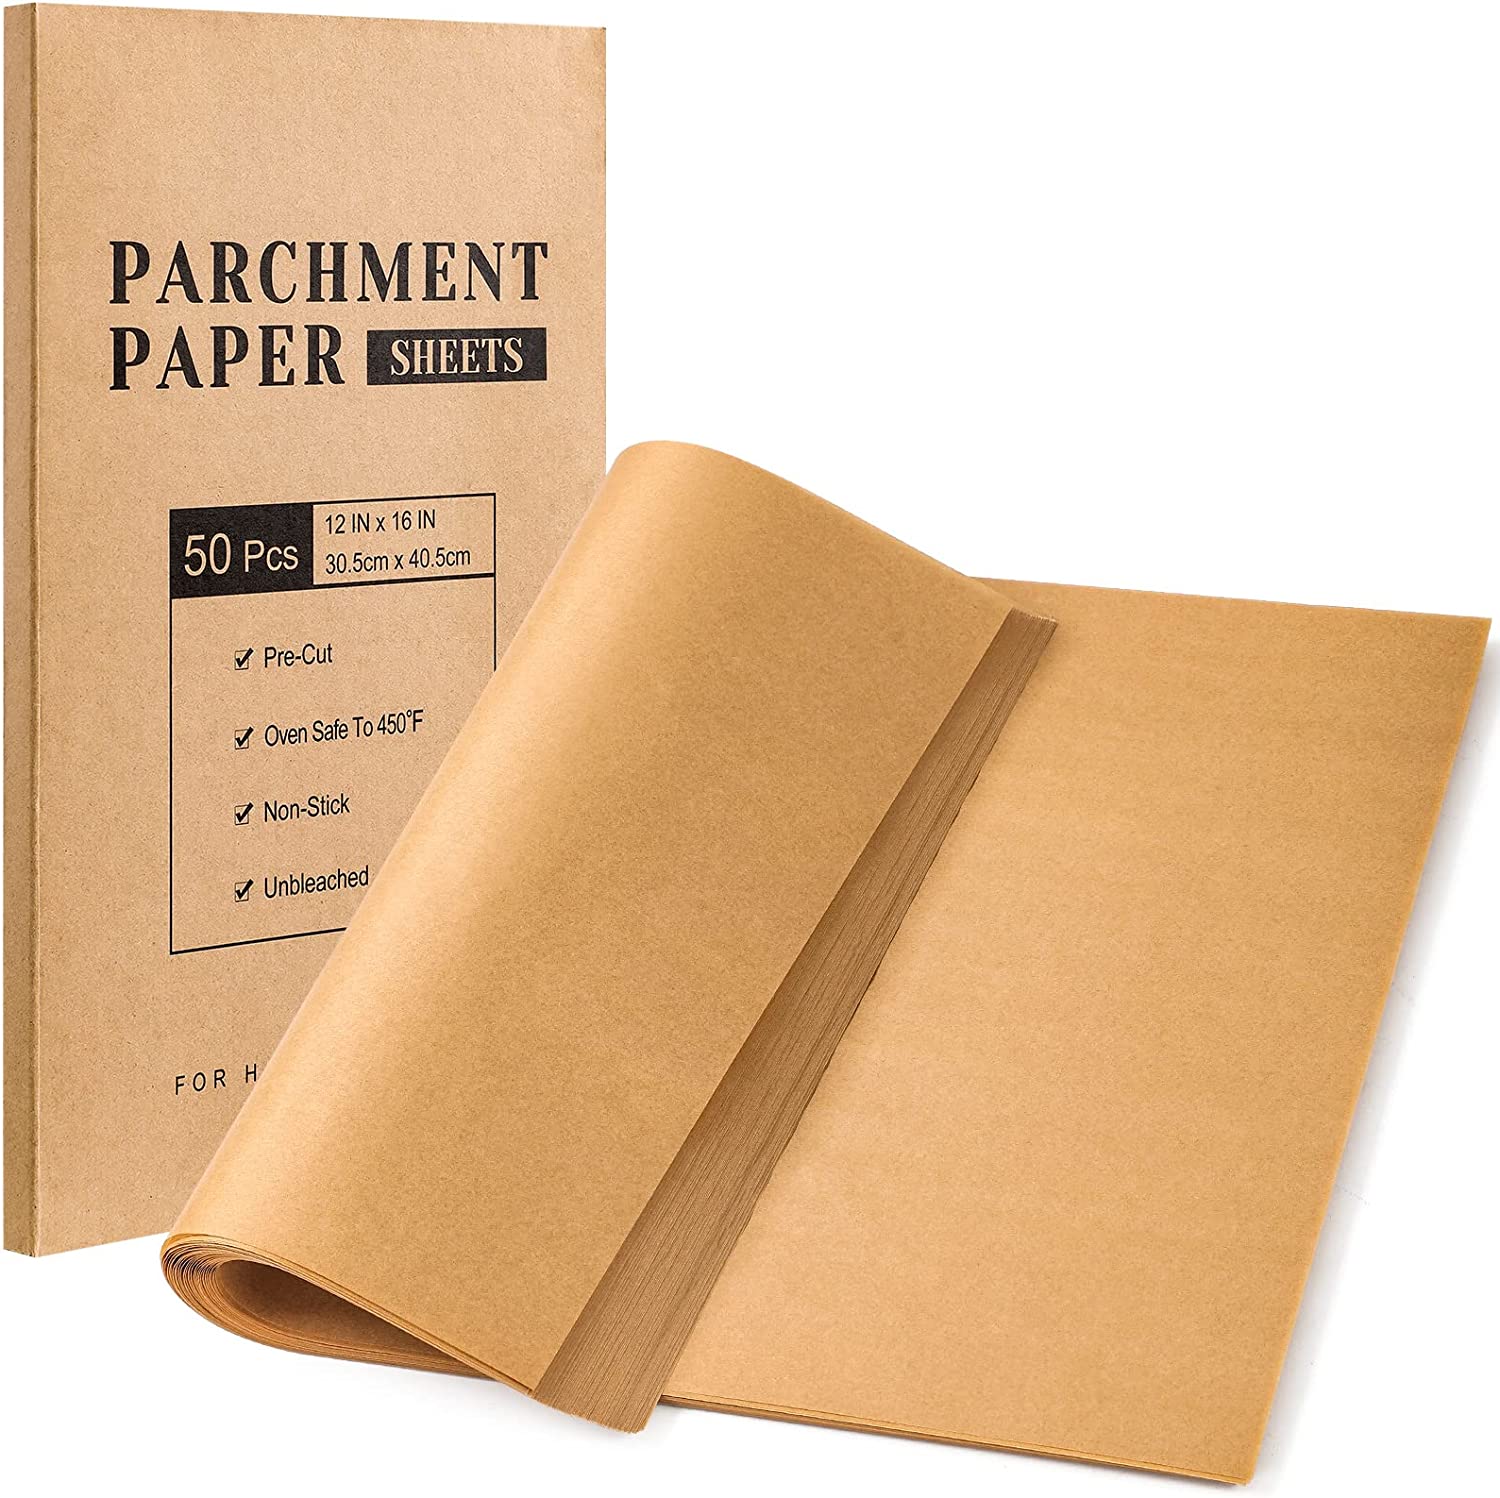 King Arthur Flour Precut Baking Parchment Paper, Heavy Duty, Professional Grade, Nonstick, Reusable, Resealable Pack, Fits 18 inch x 13 inch Pan, 100